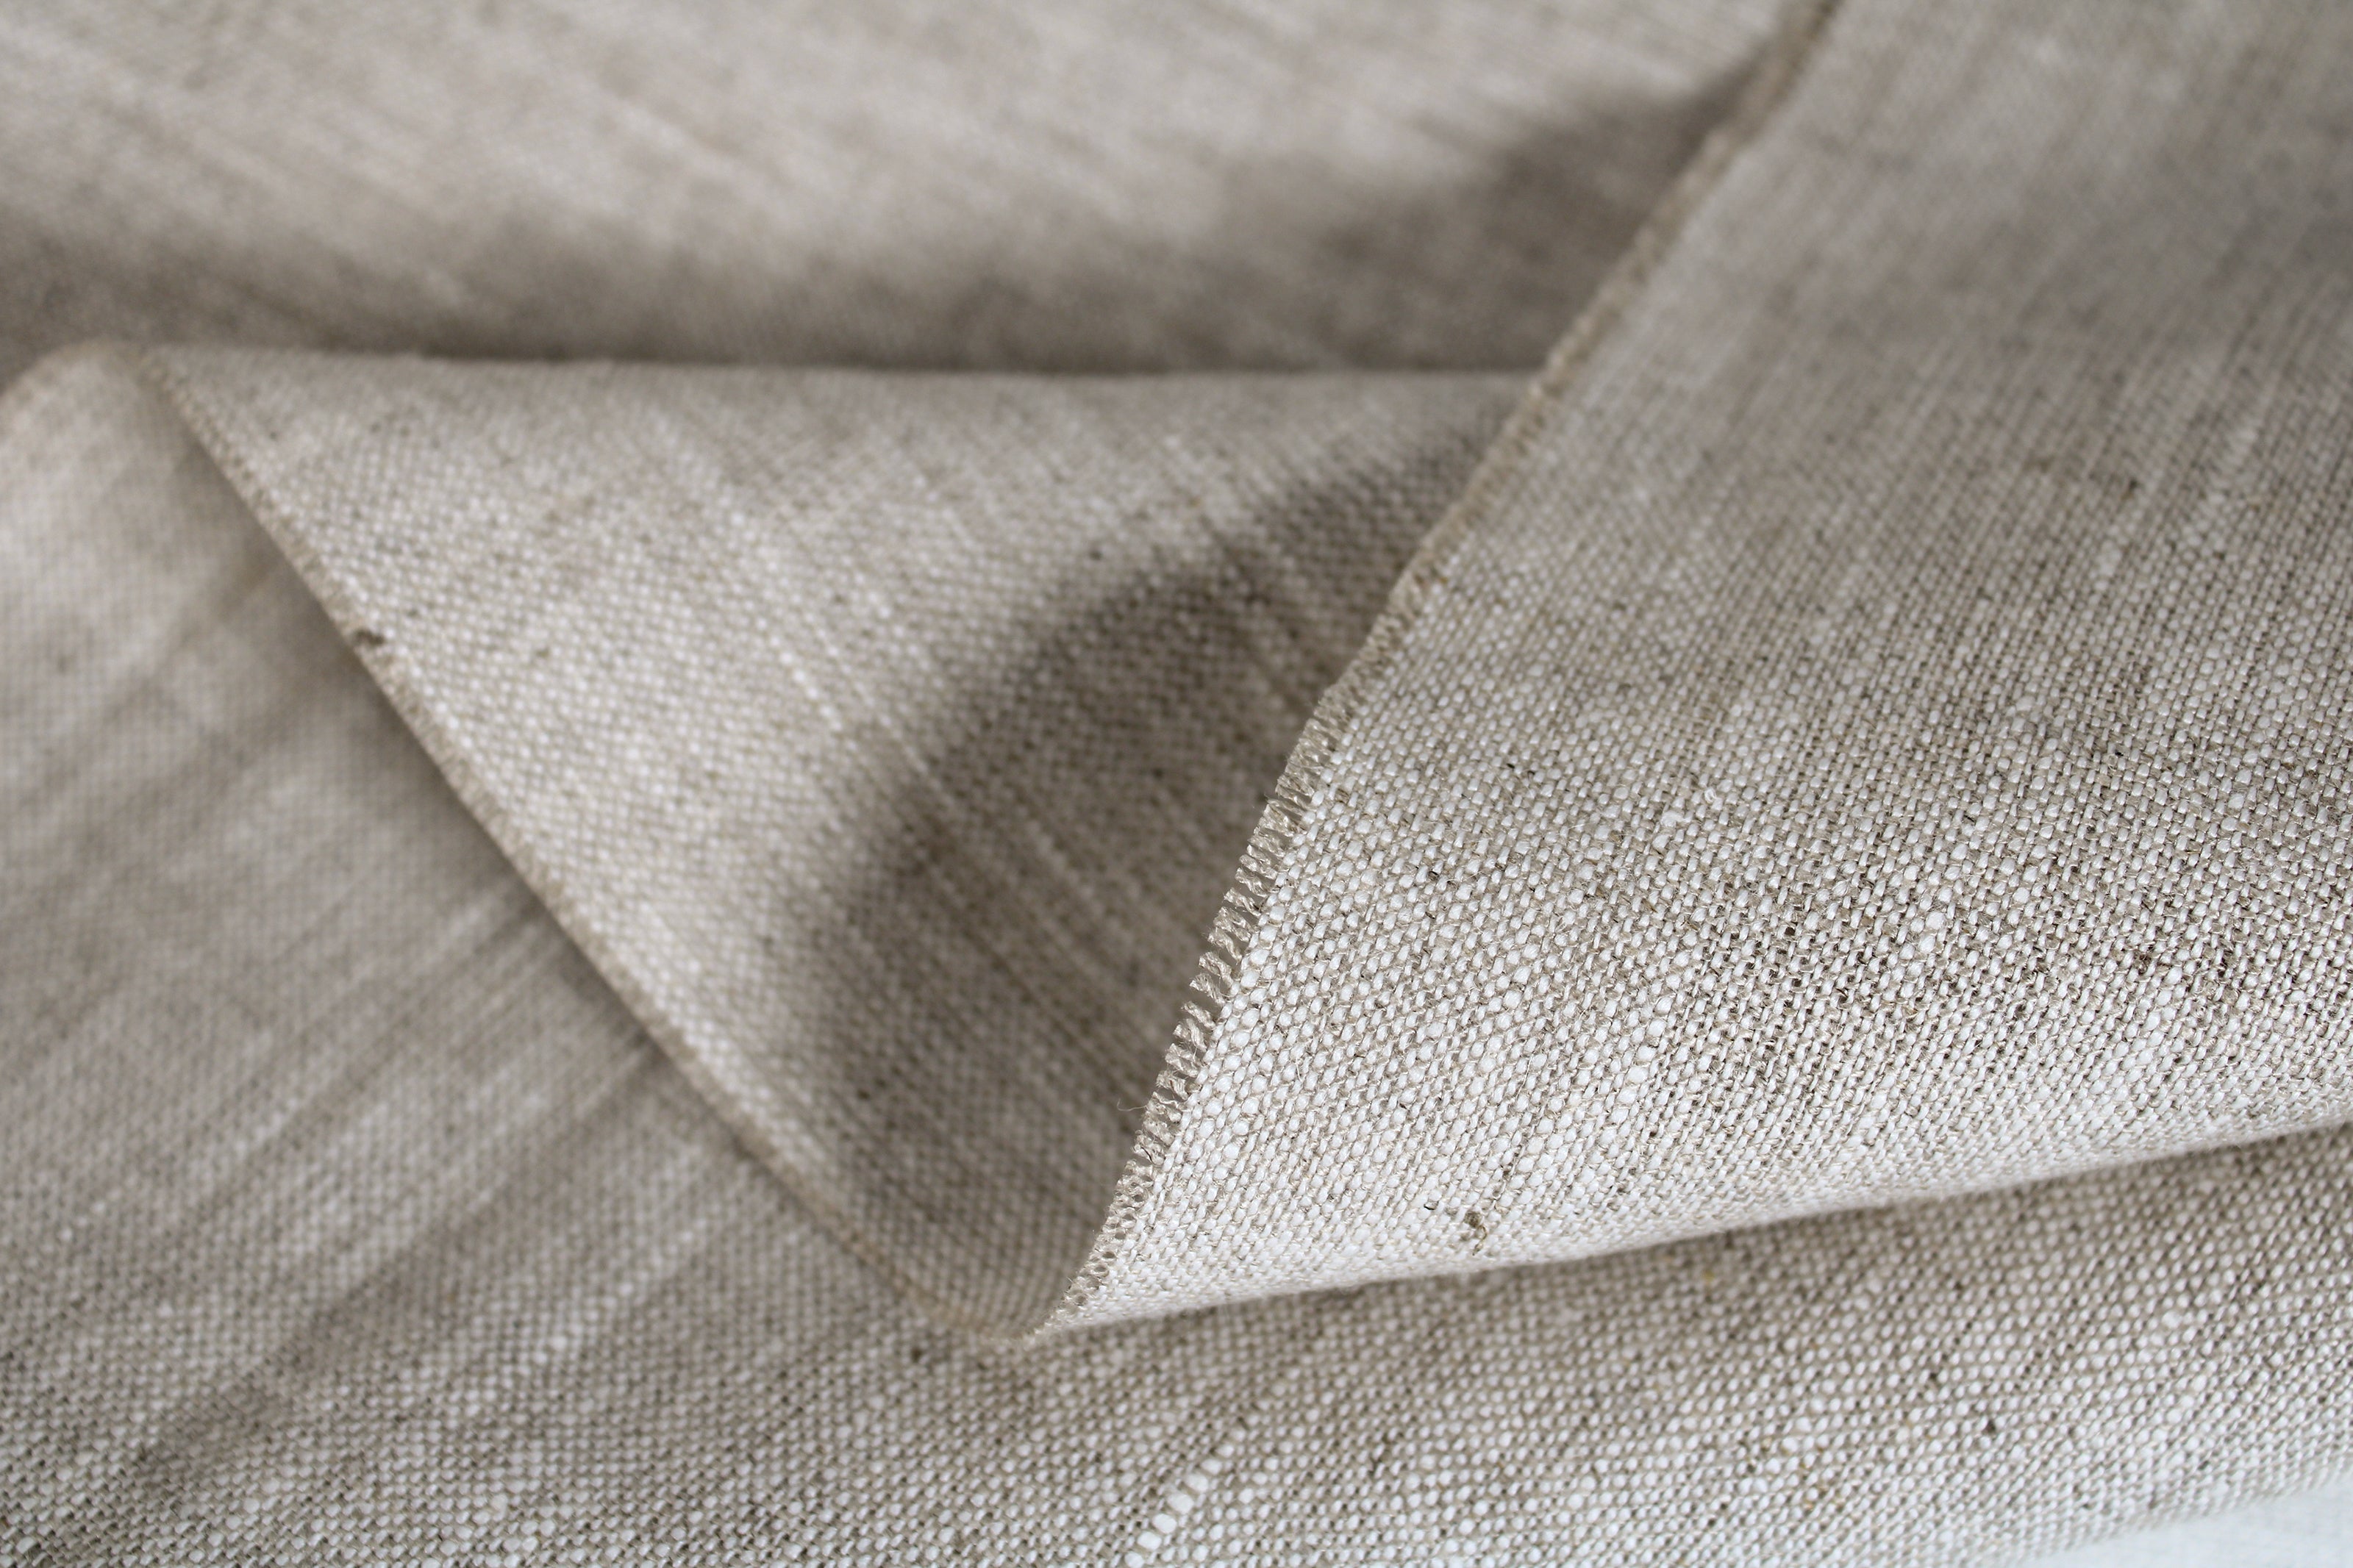 WHOLESALE Linen Fabric USA / Linen Fabric Wholesale Direct / Linen by the Bolt / Natural linen fabric